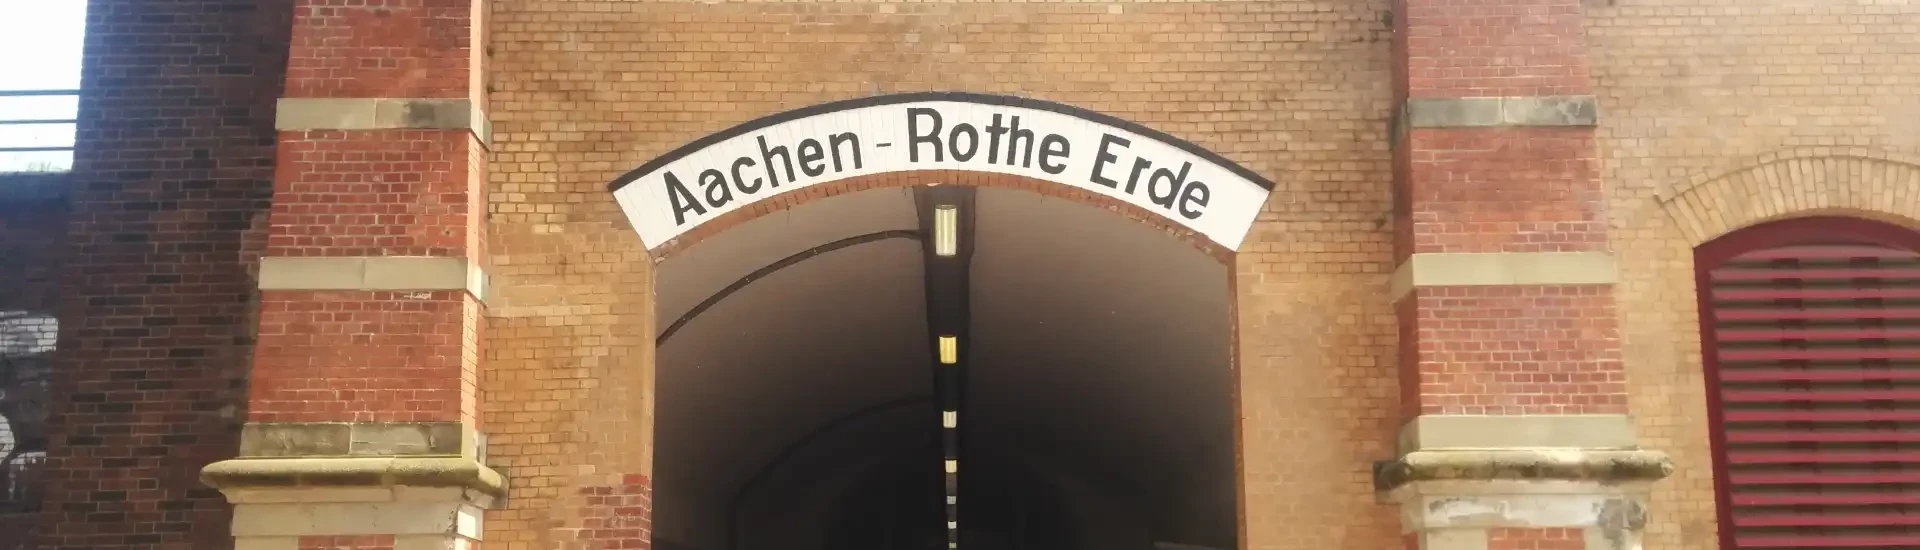 Vennbahn Aachen Rote Erde